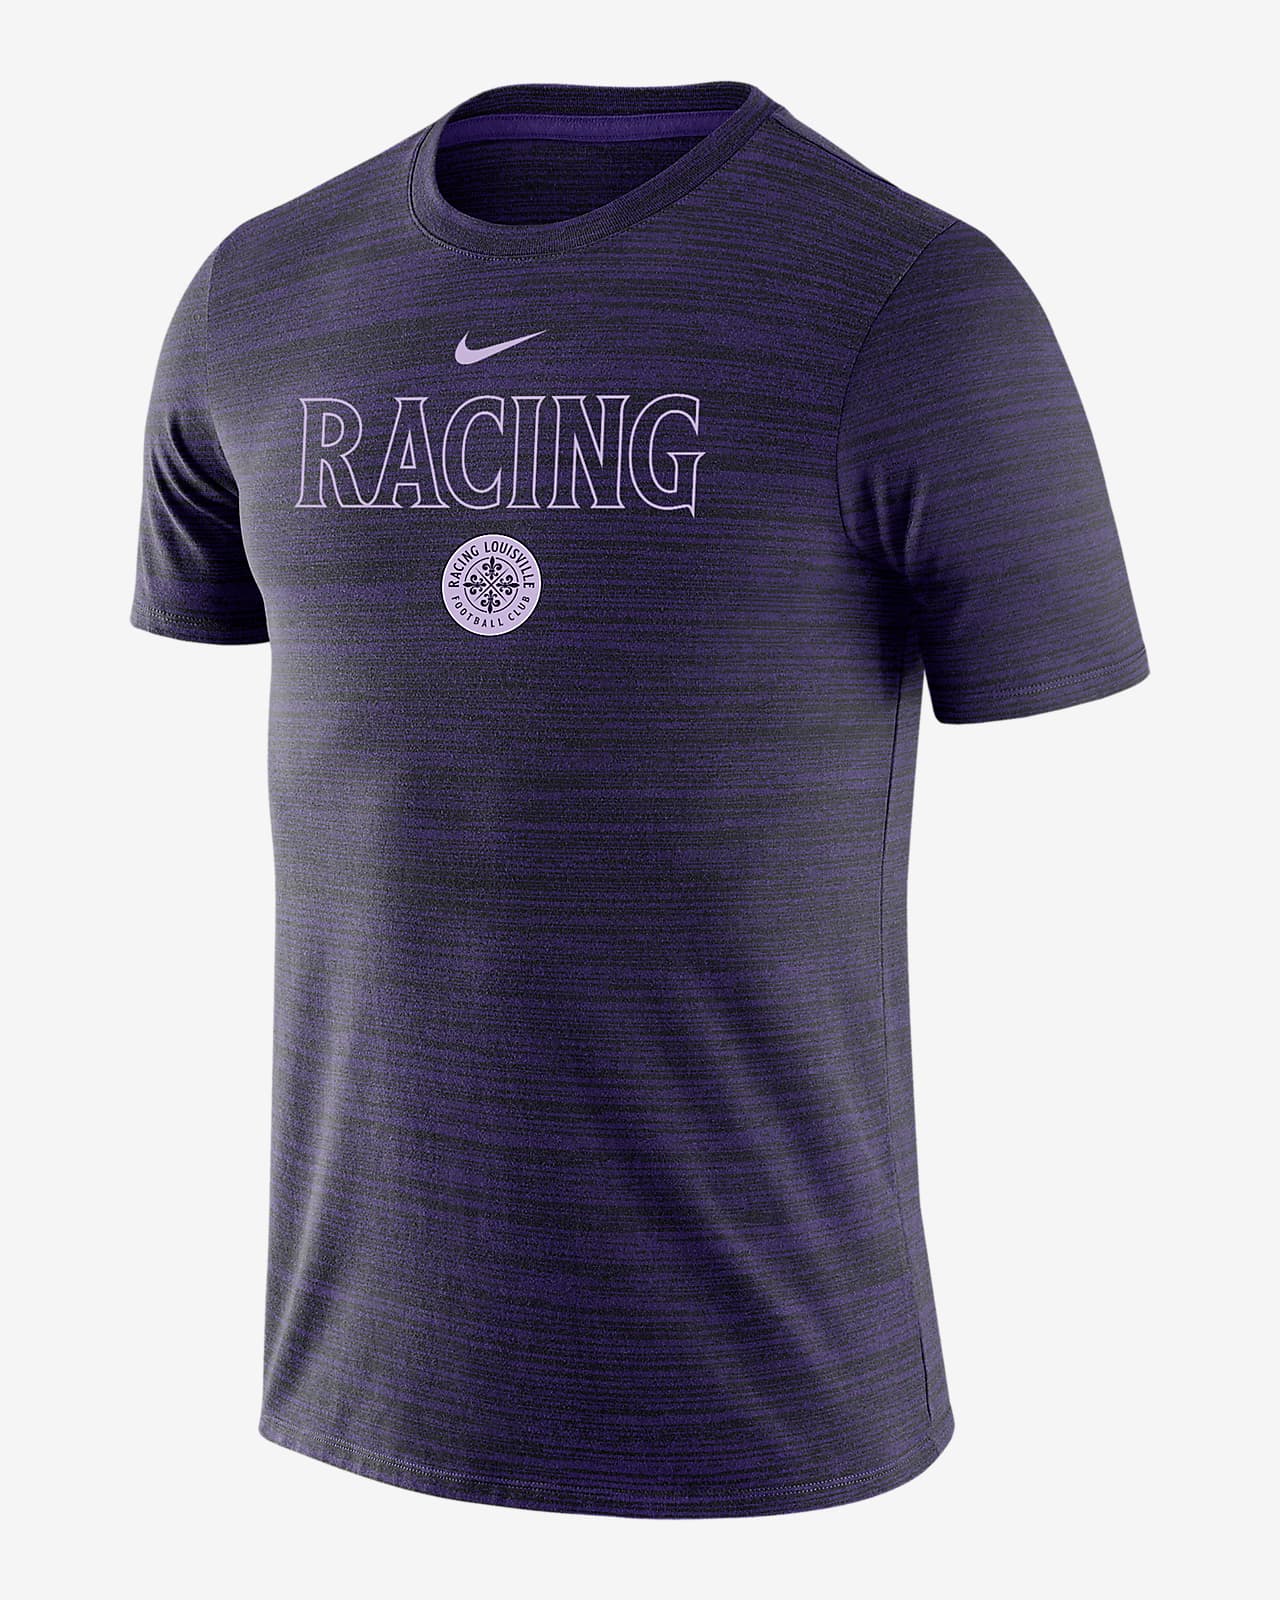 Racing Louisville Velocity Legend Men's Nike Soccer T-Shirt